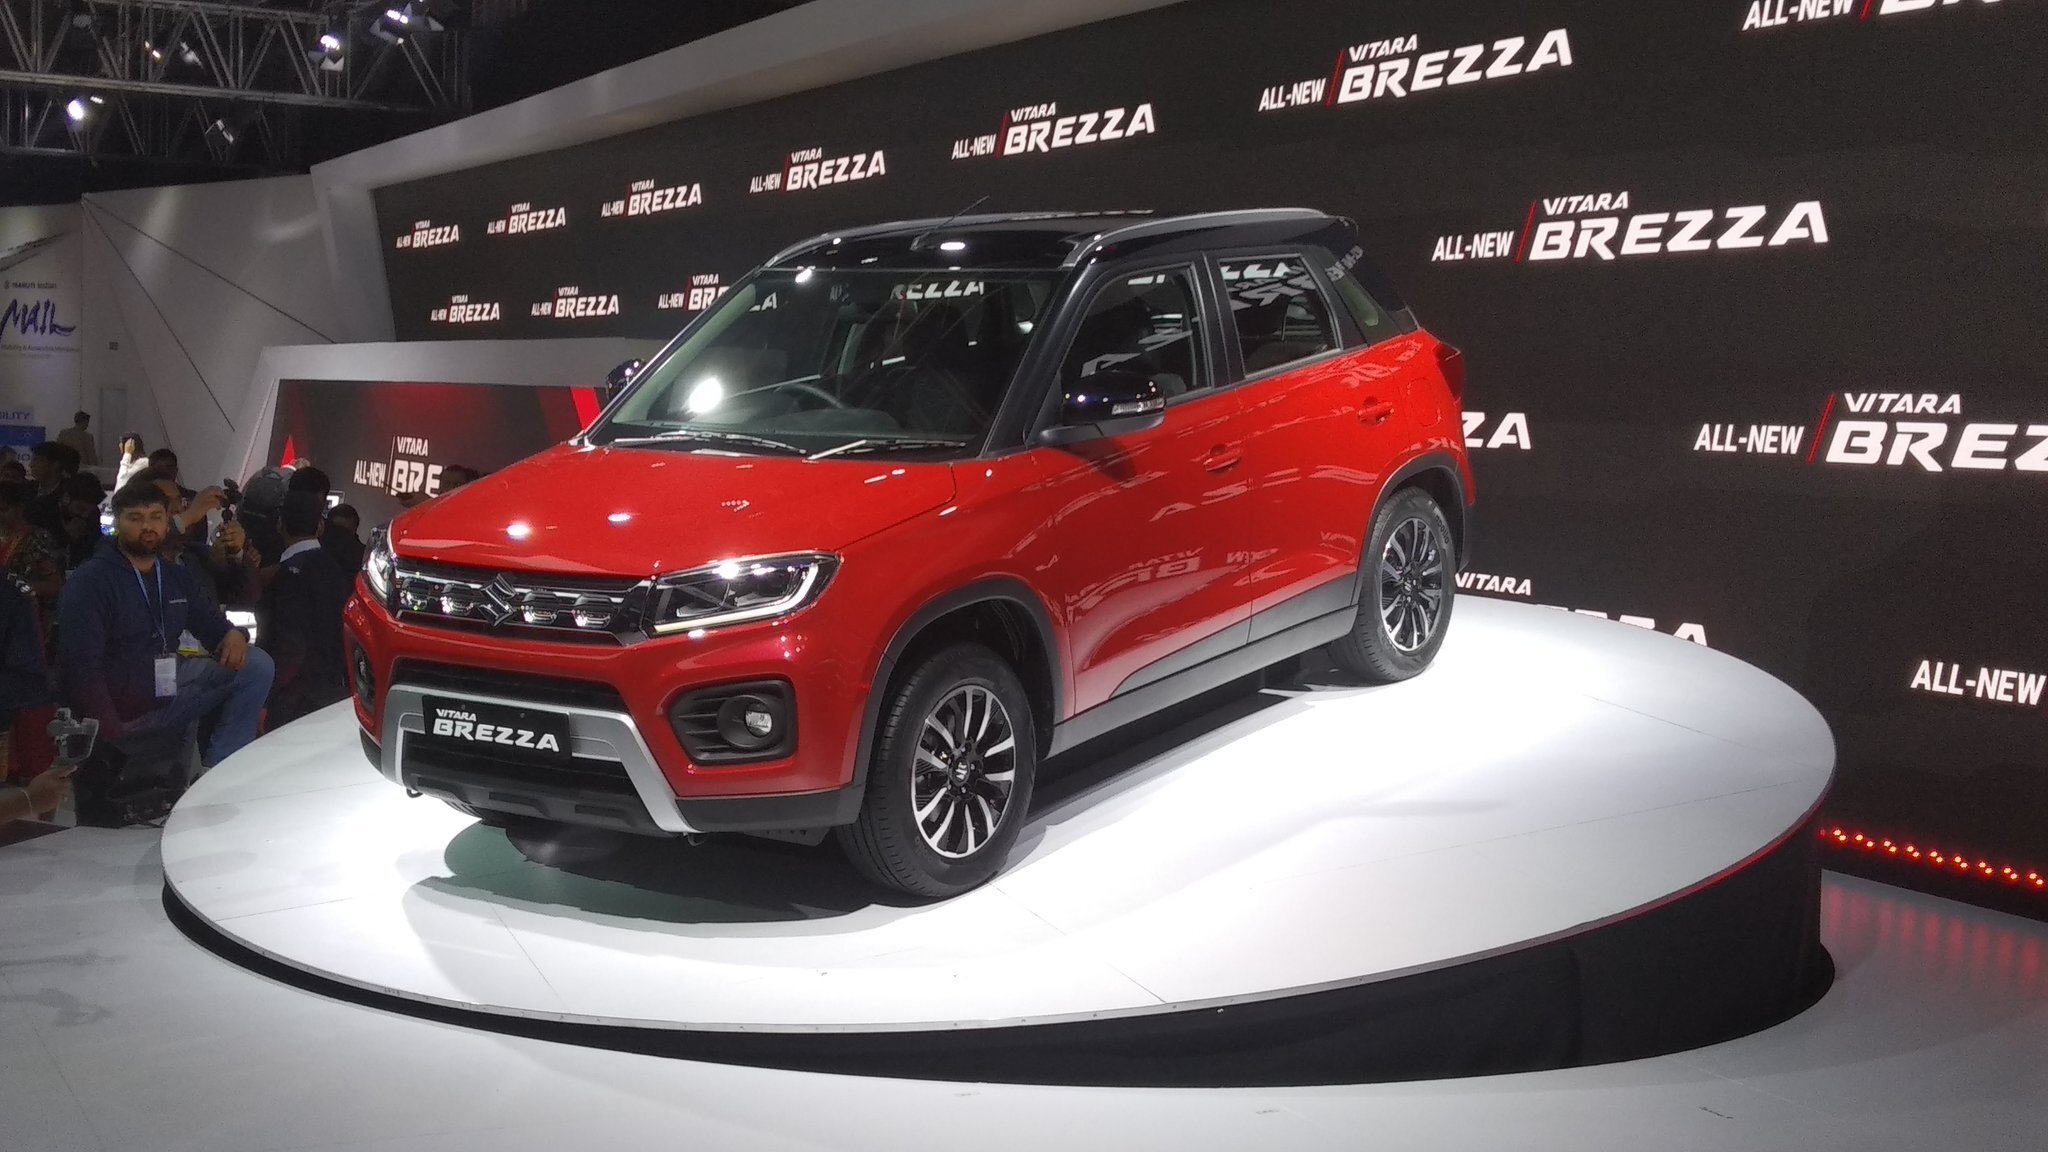 Maruti Suzuki Vitara Brezza facelift: 5 important things you should know